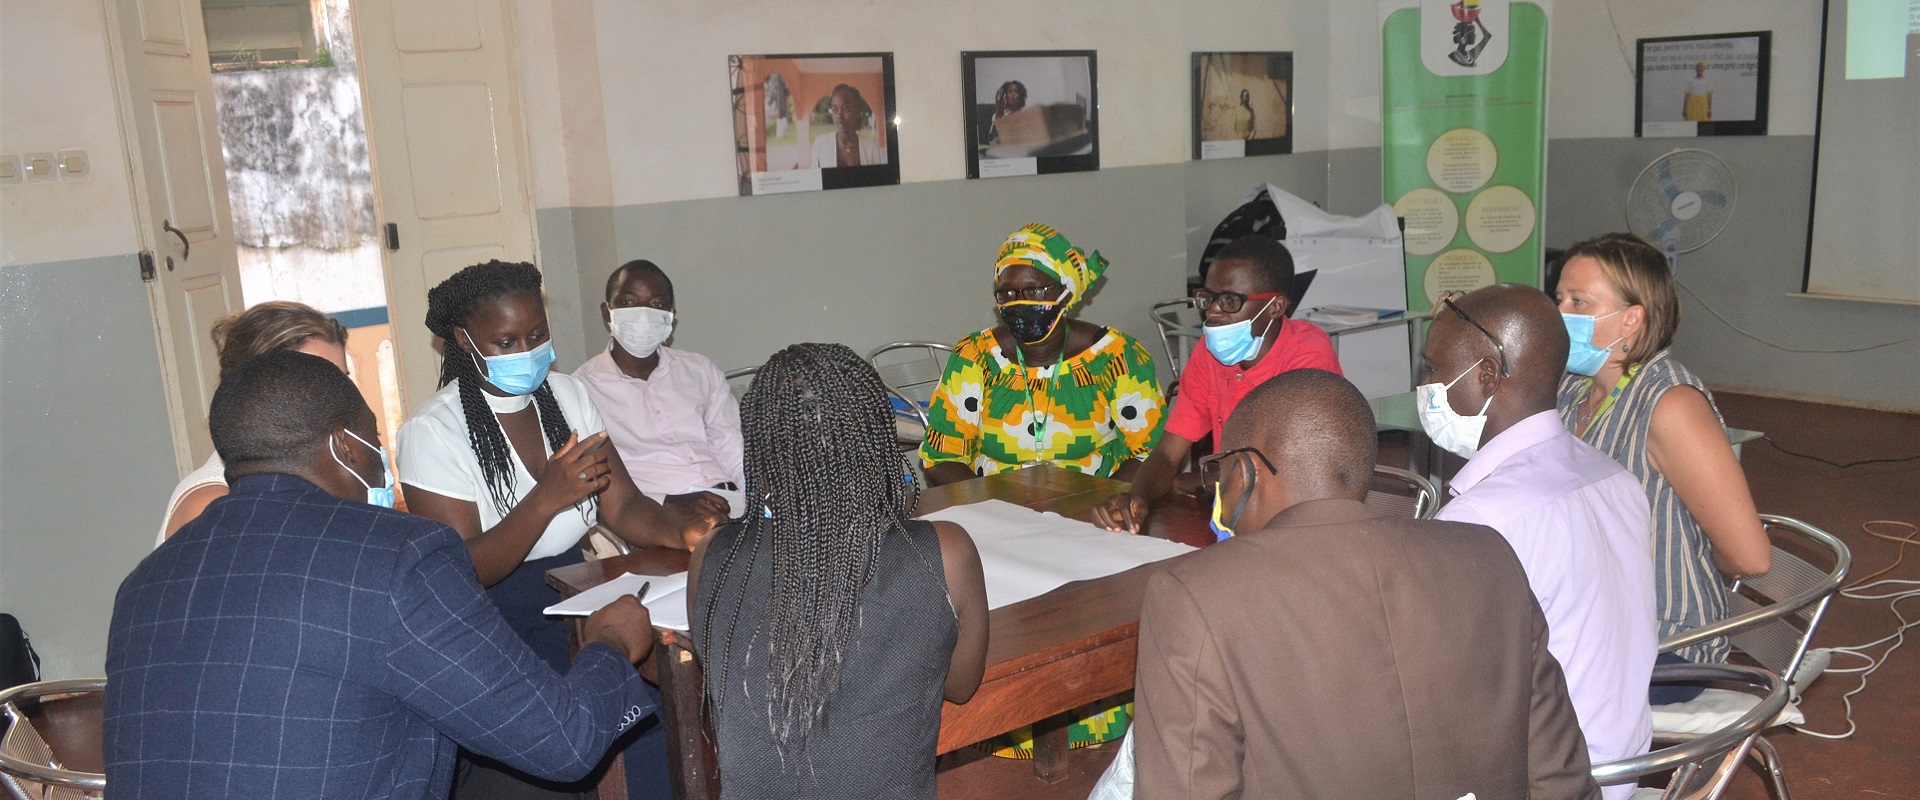 proteggere le donne in guinea bissau mani tese 2020 cover 1